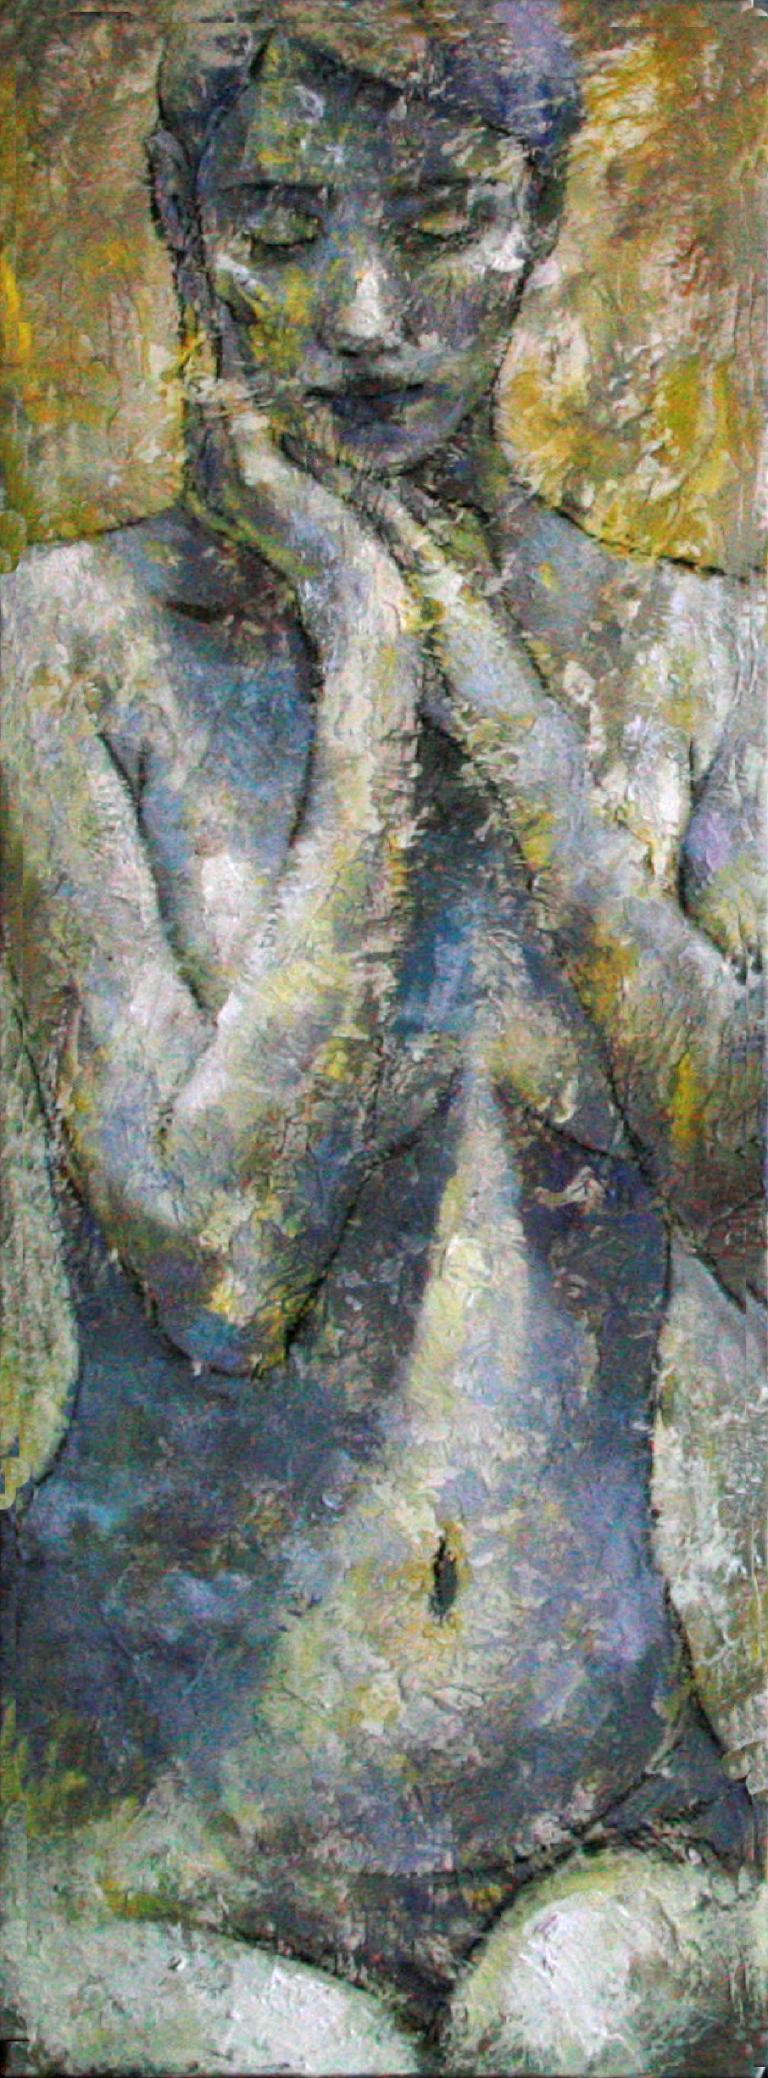 Montse Valdés Portrait Painting - 11-1-12 - 21st Century, Contemporary, Nude Painting, Oil on Canvas